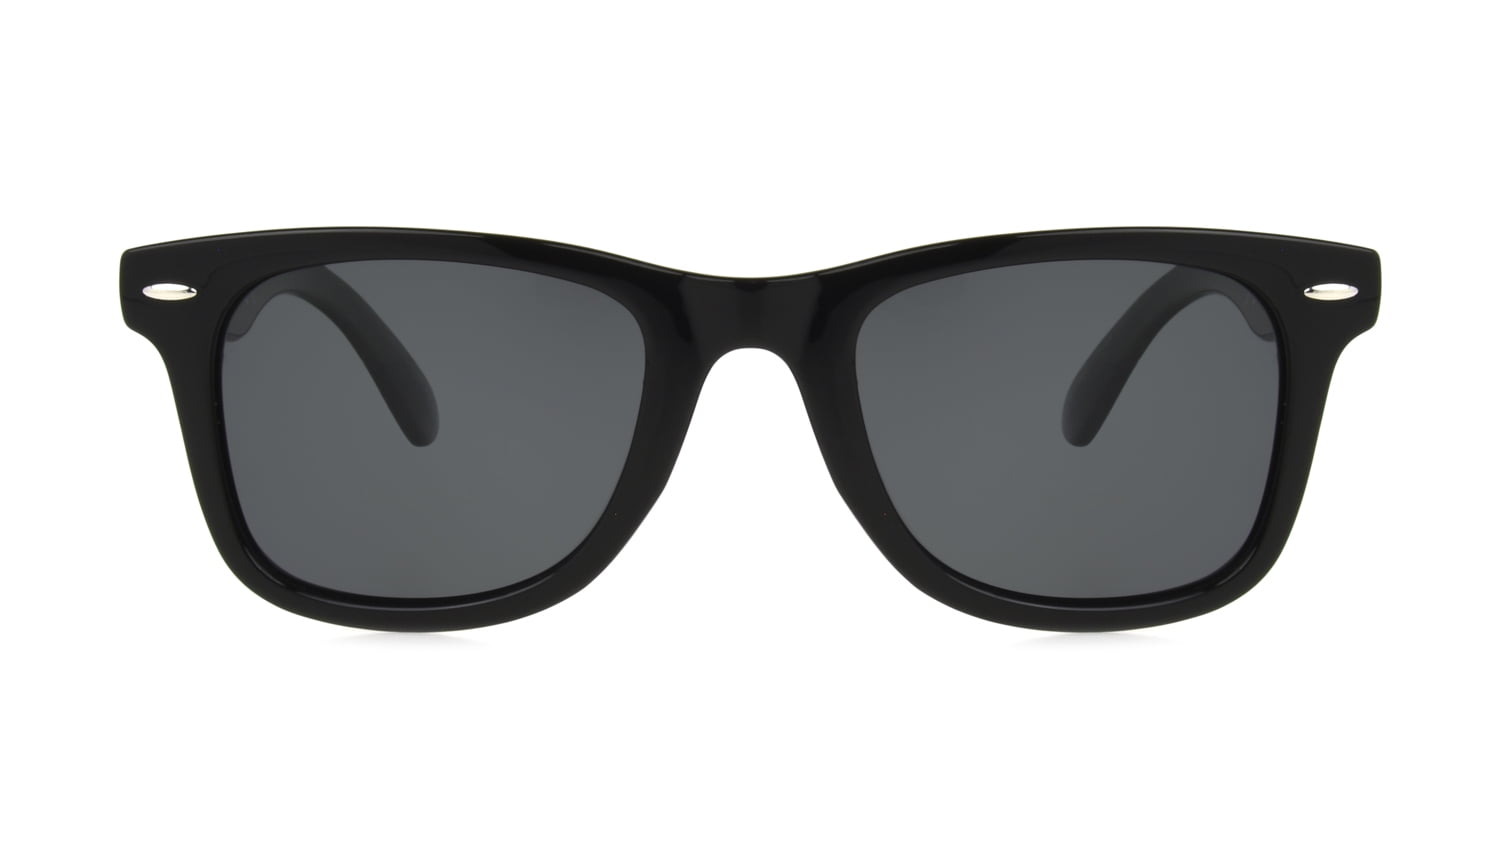 Foster Grant Men's Way Fashion Sunglasses Dark Gunmetal 